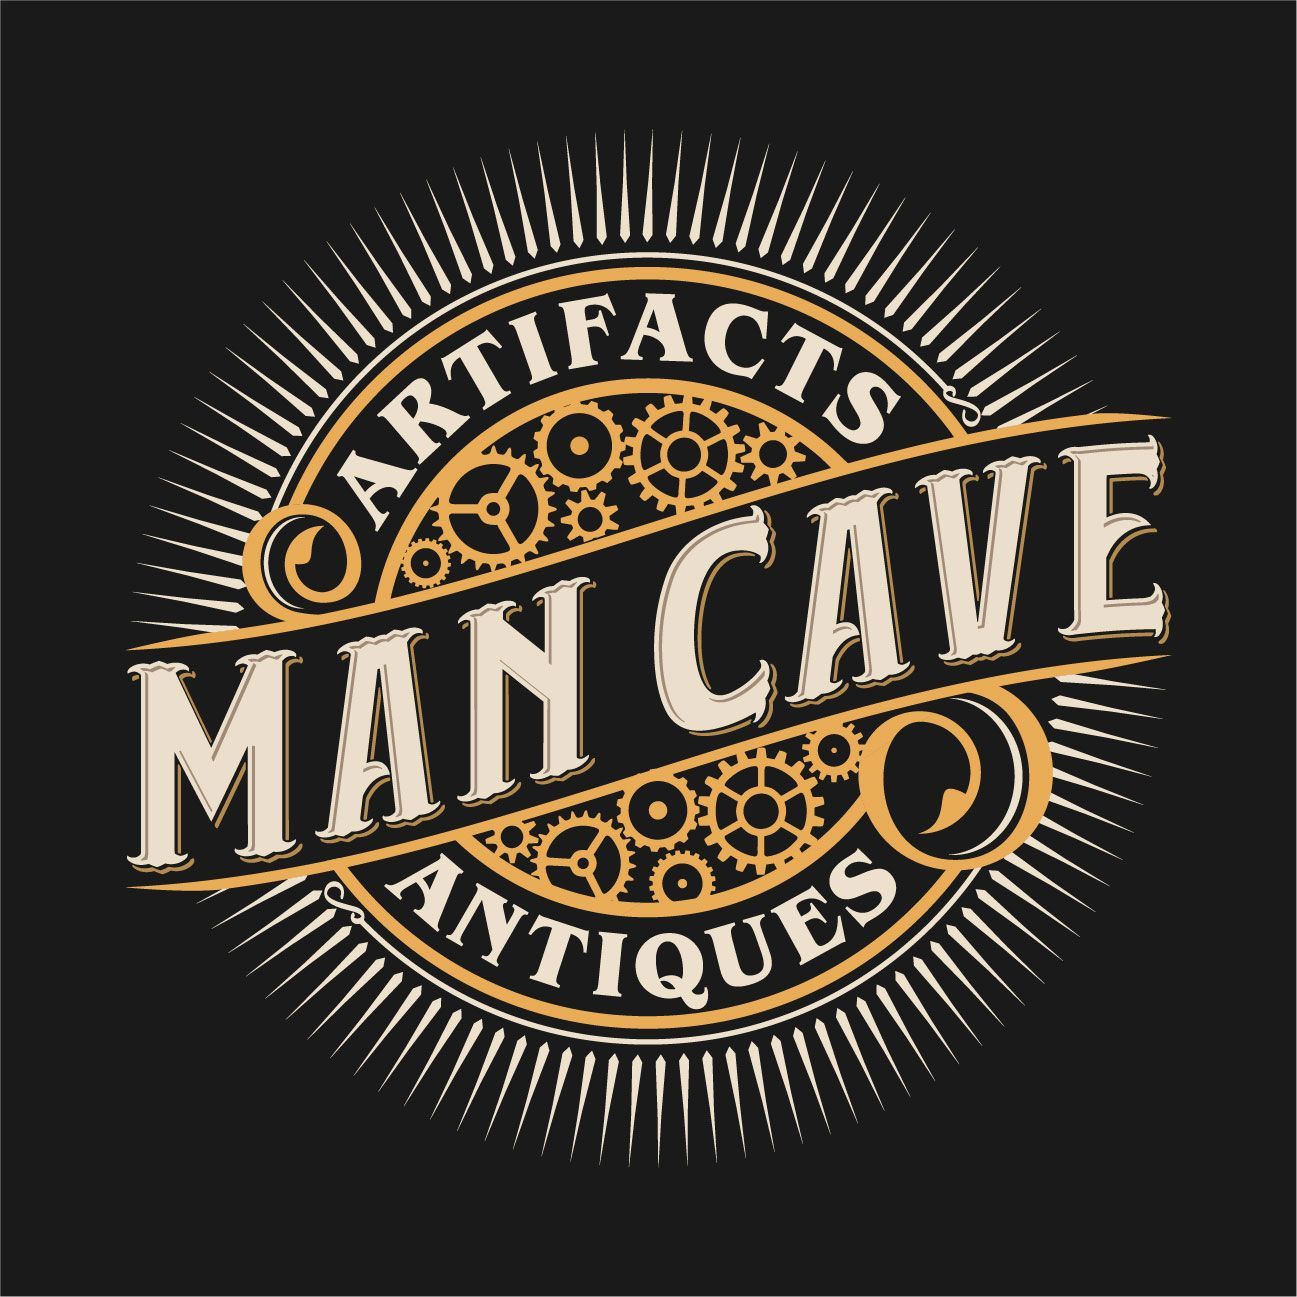 Man Cave Antiques